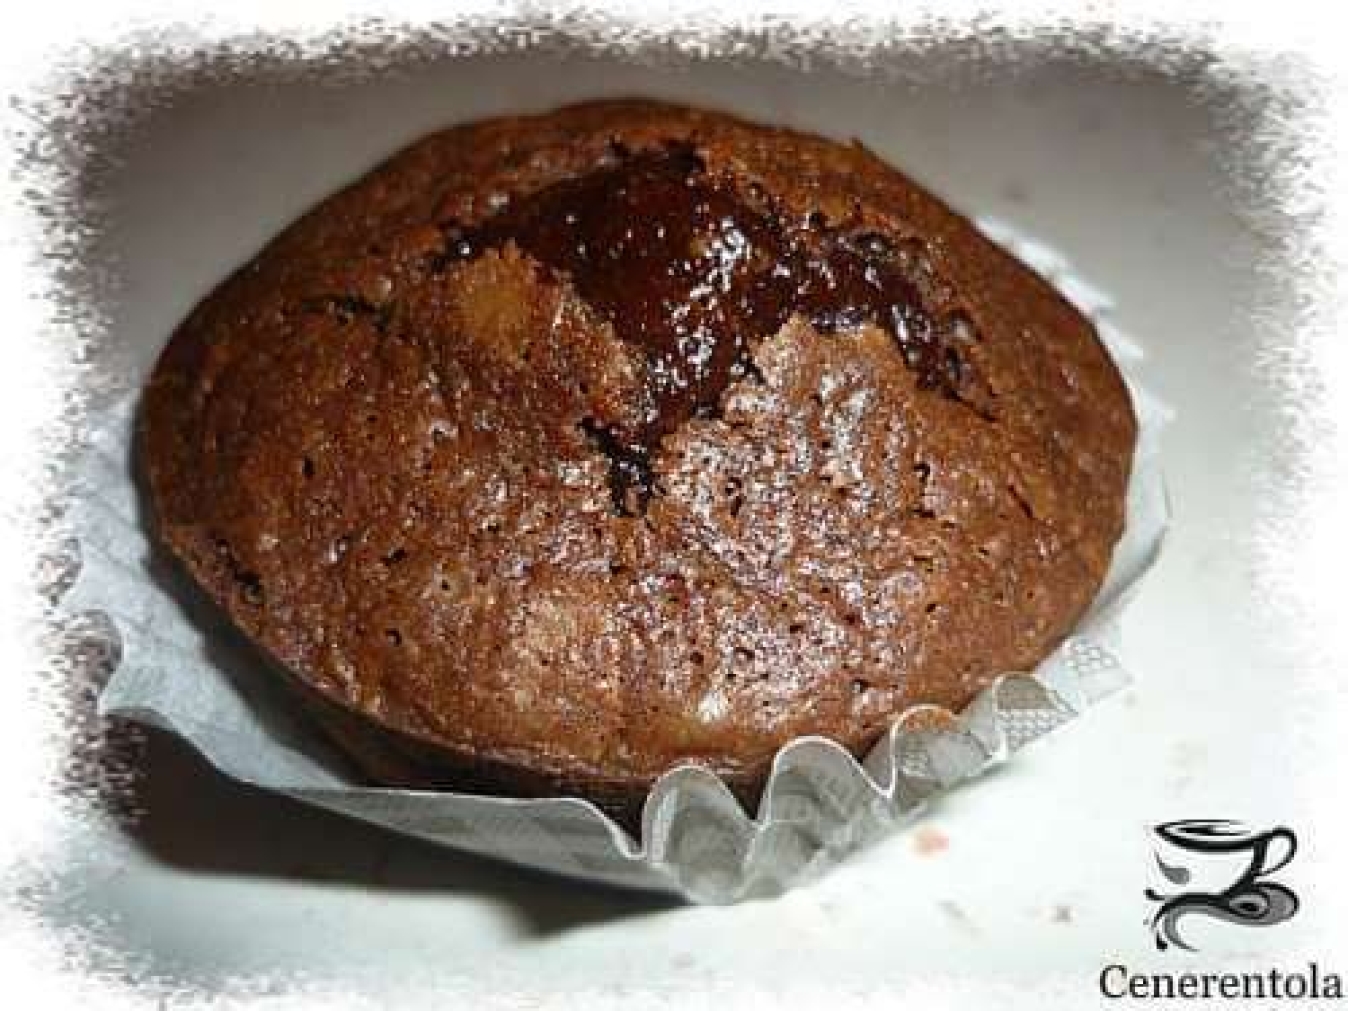 La recette de Cenerentola : Muffin's choco et coeur praline